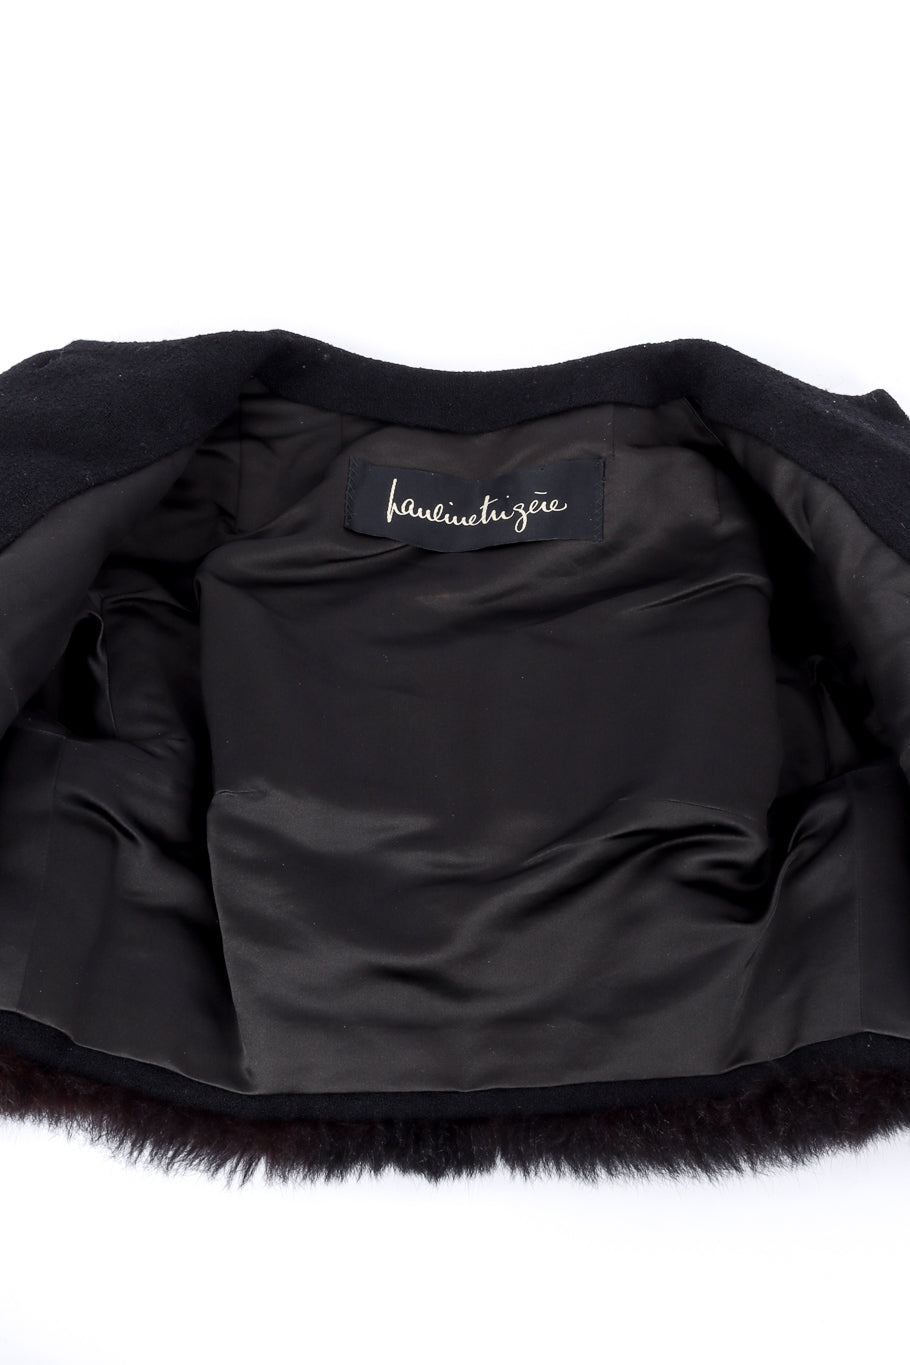 Vintage Pauline Trigere Cropped Fur Jacket view of lining @recessla